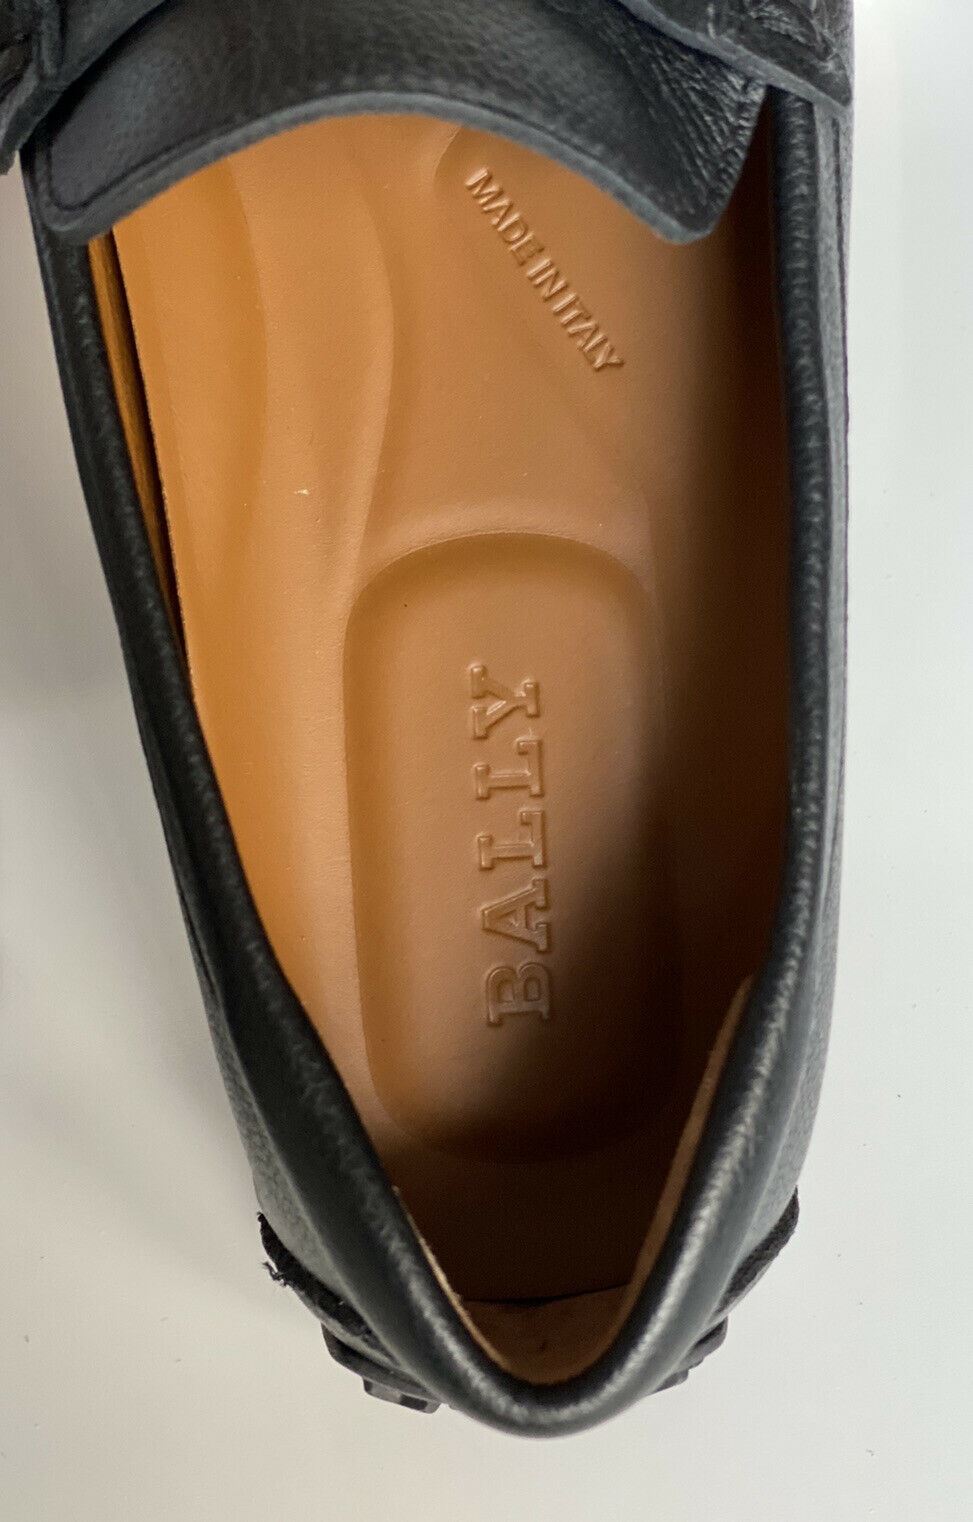 NIB $510 Bally Pitaval Mens Bovine Leather Driver Shoes Black 10.5 US 6227955 IT